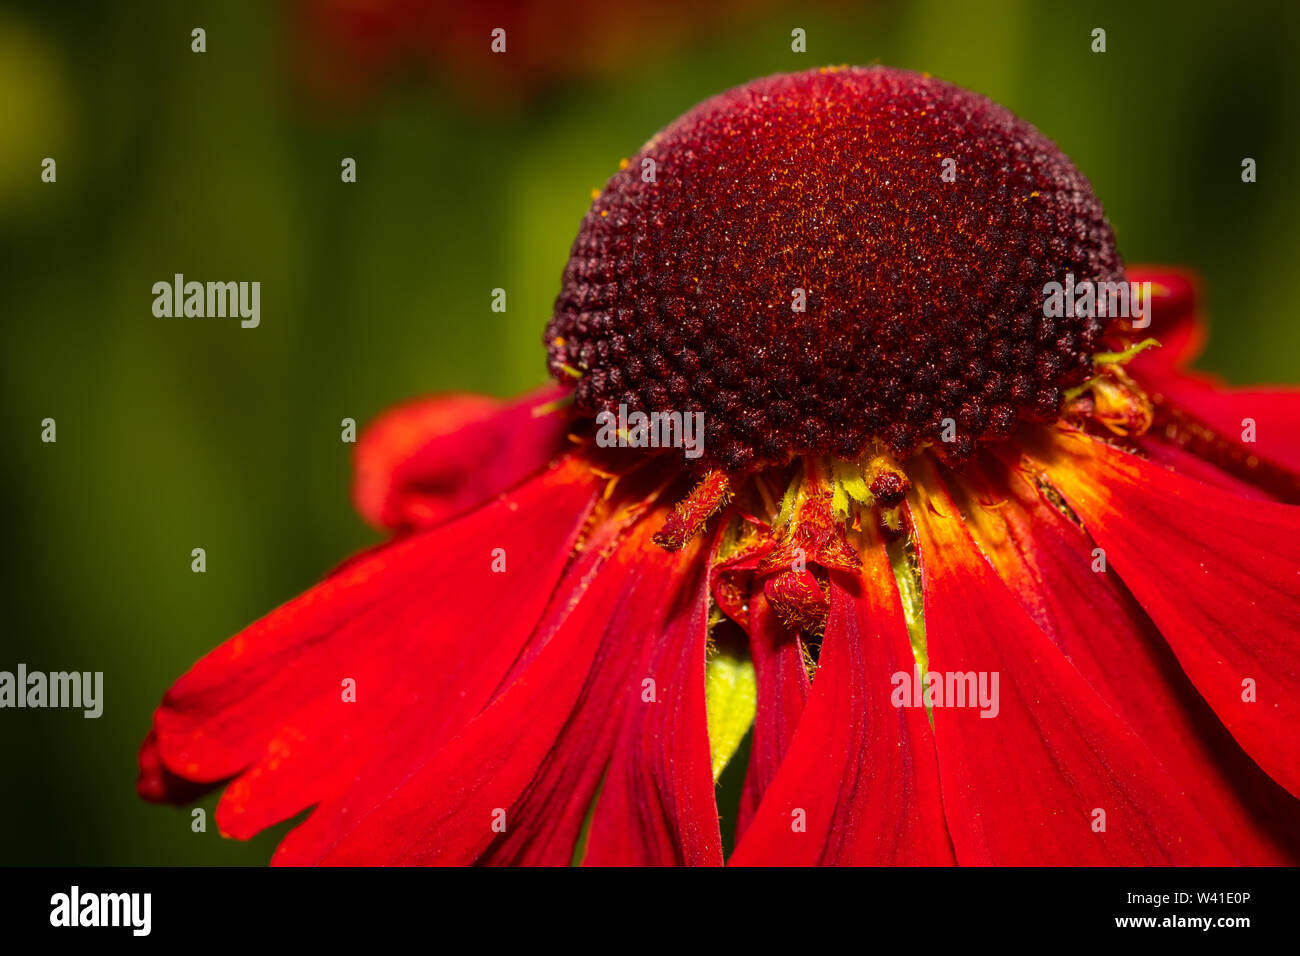 beautiful corolla of a red daisy flower macro close up image Stock Photo